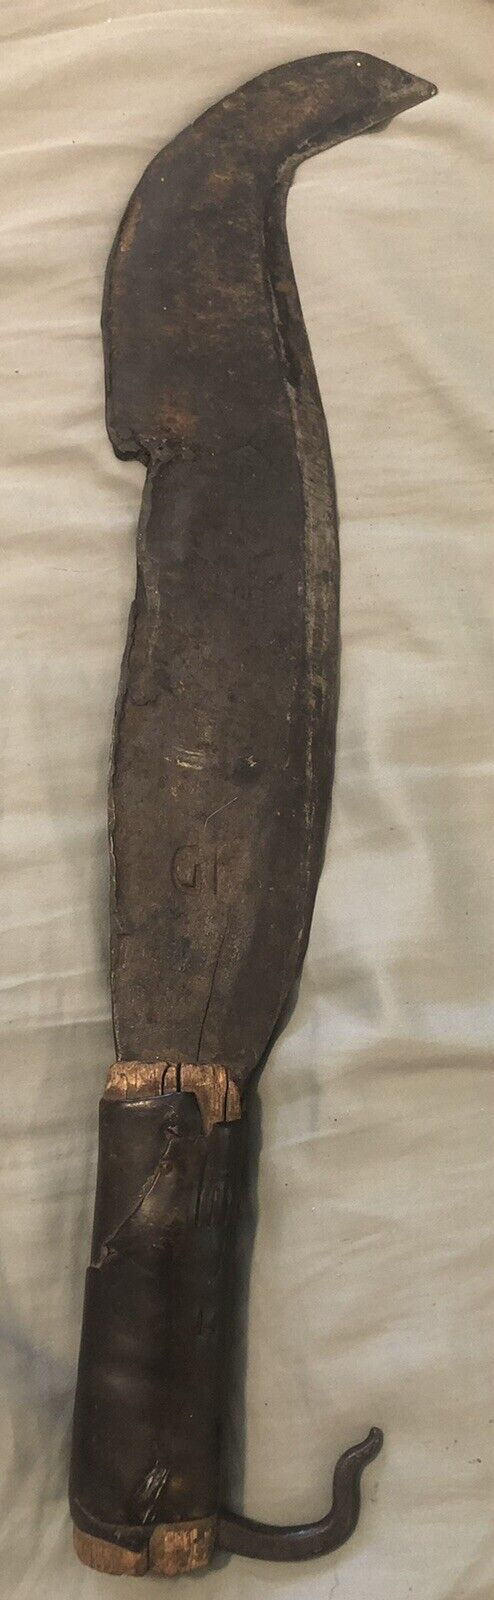 Primitive Hand Made Scythe Sickle Rustic Wood Metal Knife Tool 16-1/2